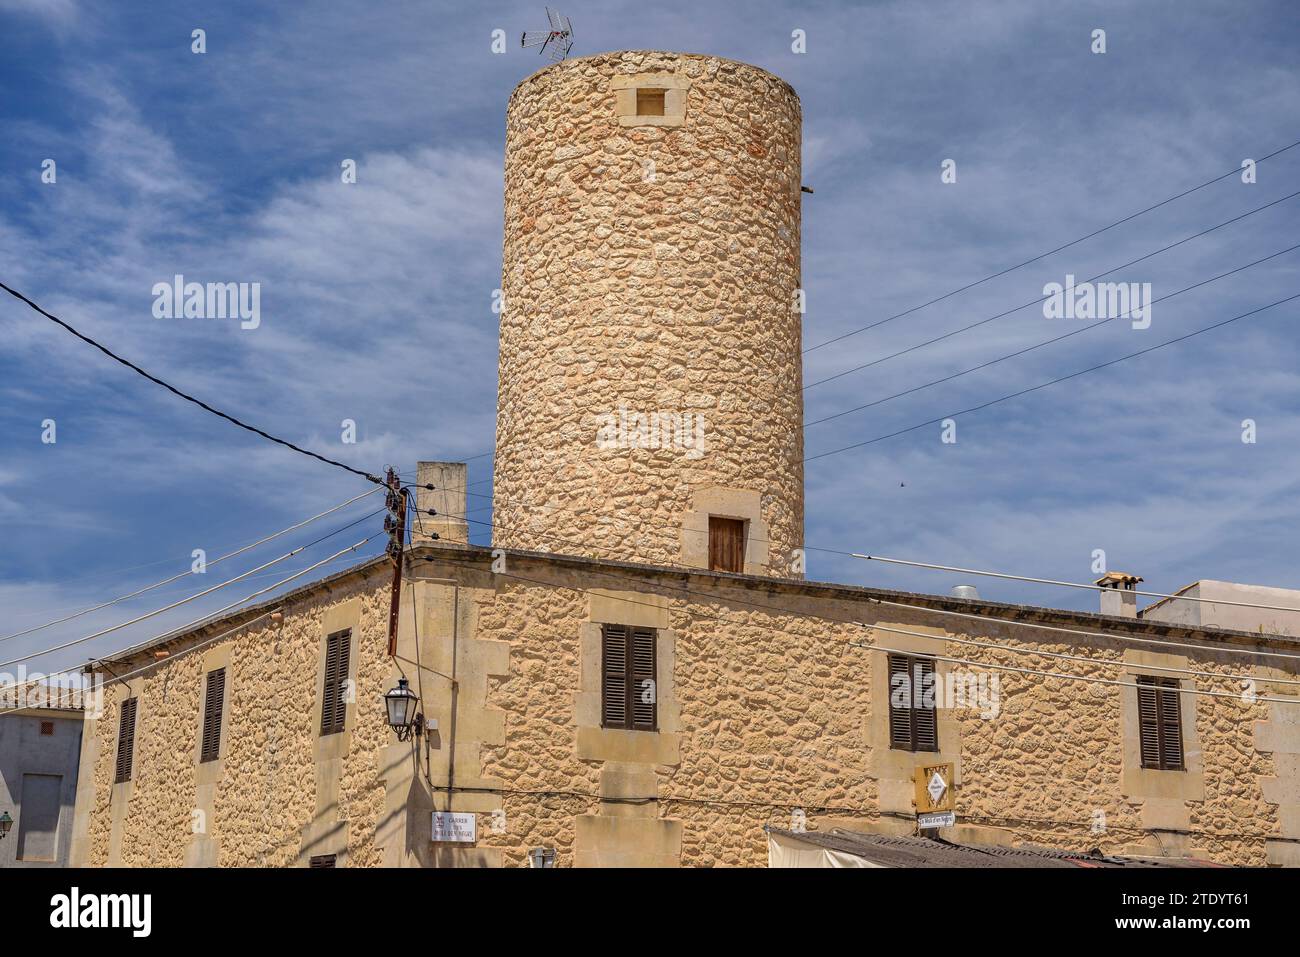 The windmill Molí d'en Negre, in the village of Porreres (Mallorca, Balearic Islands, Spain) ESP: El molino d'en Negre, en el pueblo de Porreres Stock Photo